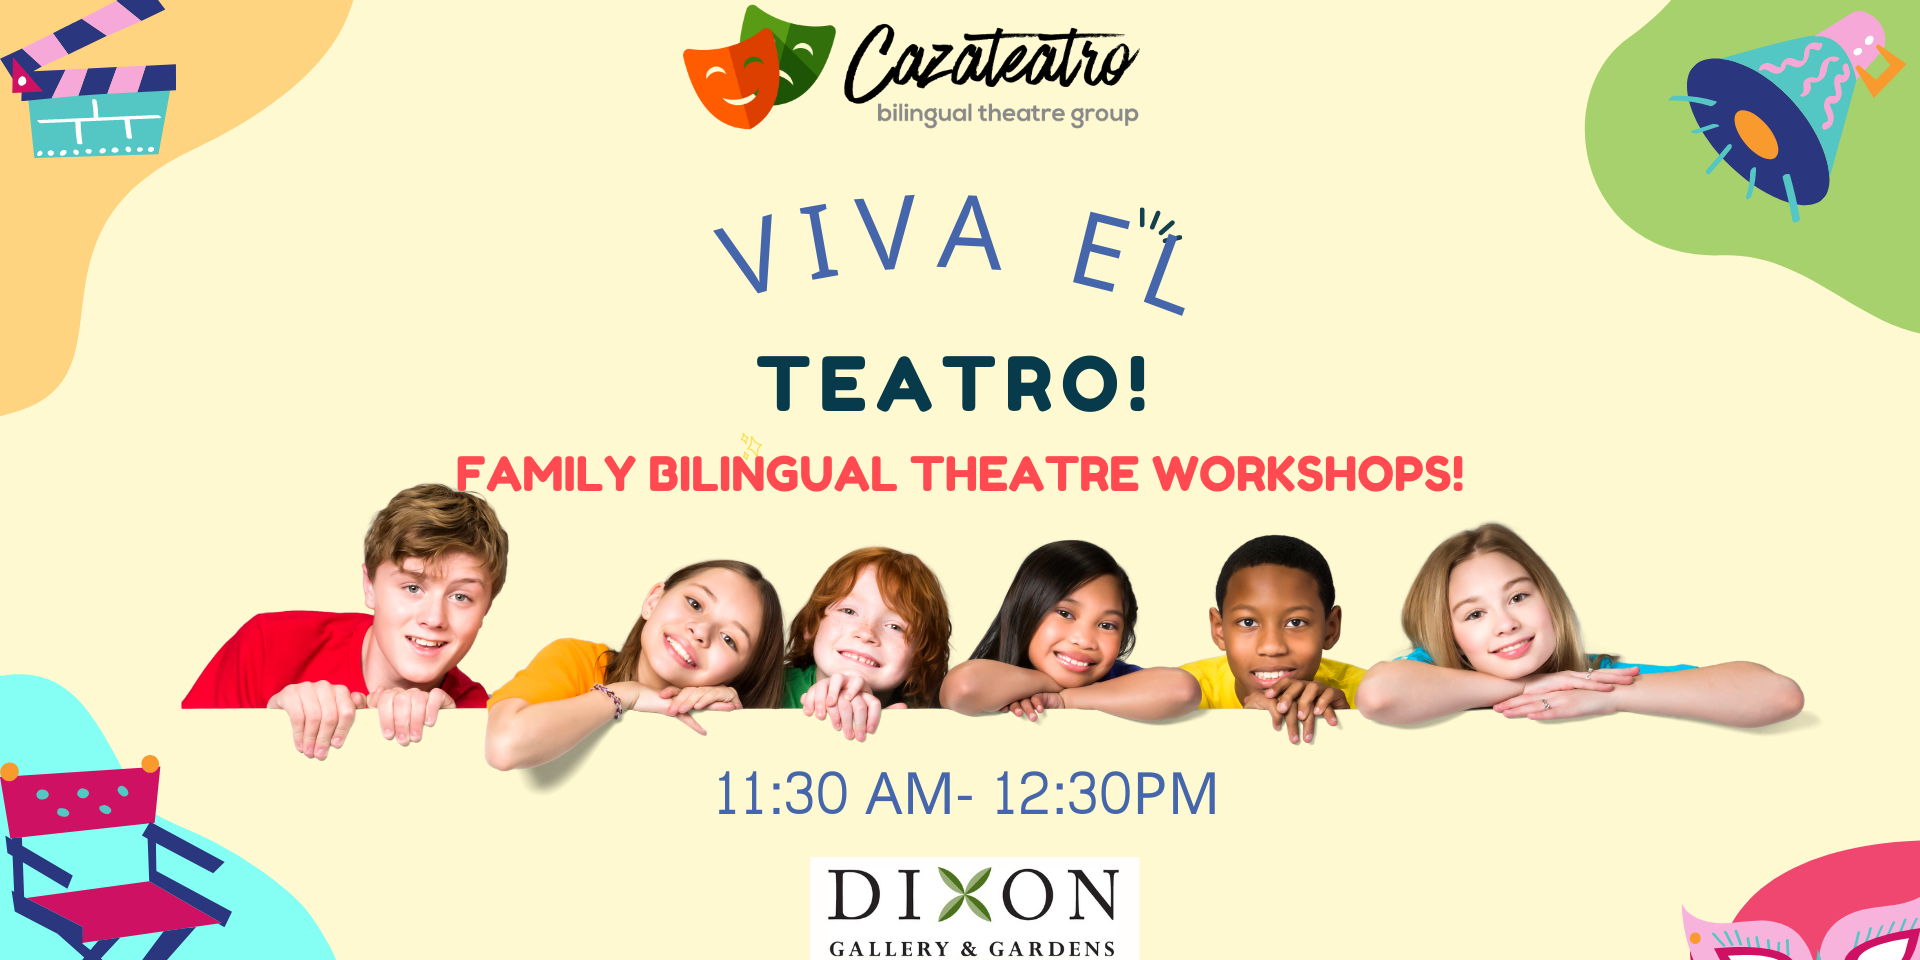 ¡VIVA EL TEATRO! Bilingual Theatre Workshops promotional image